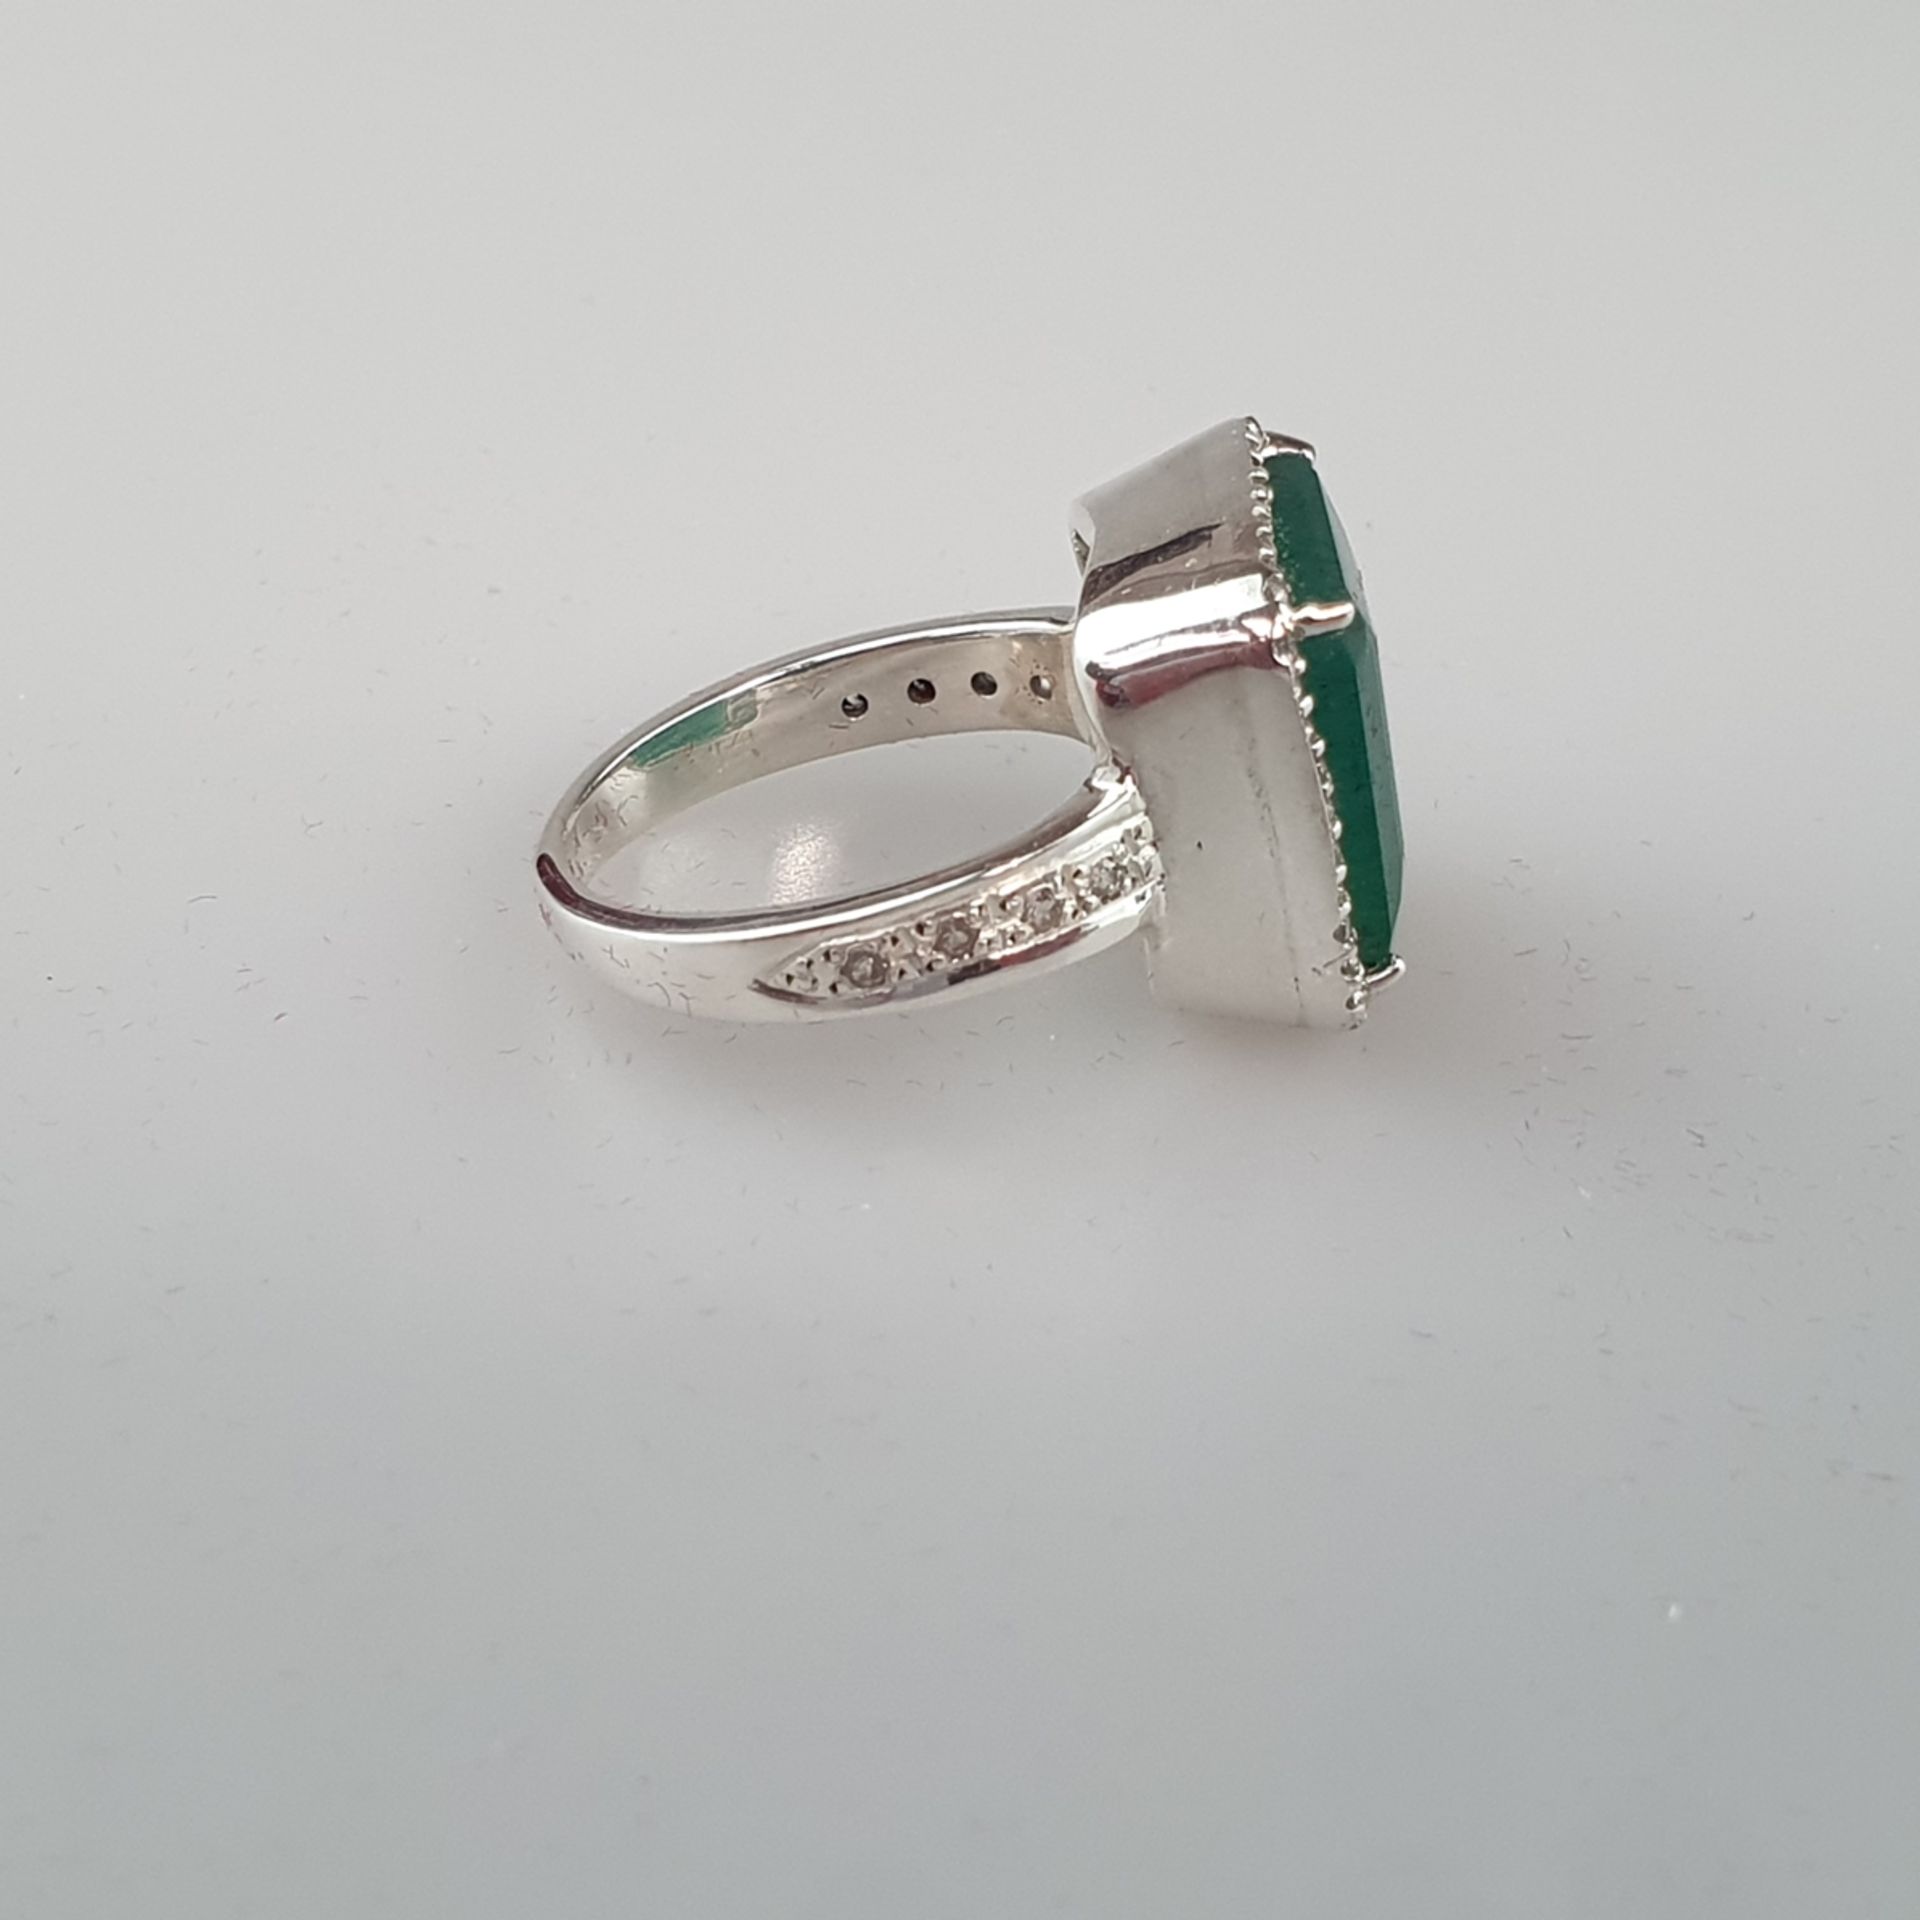 Silberring mit Smaragd - Sterling Silber, gestempelt, rechteckiger Ringkopf besetzt mit Smaragd im - Image 4 of 9